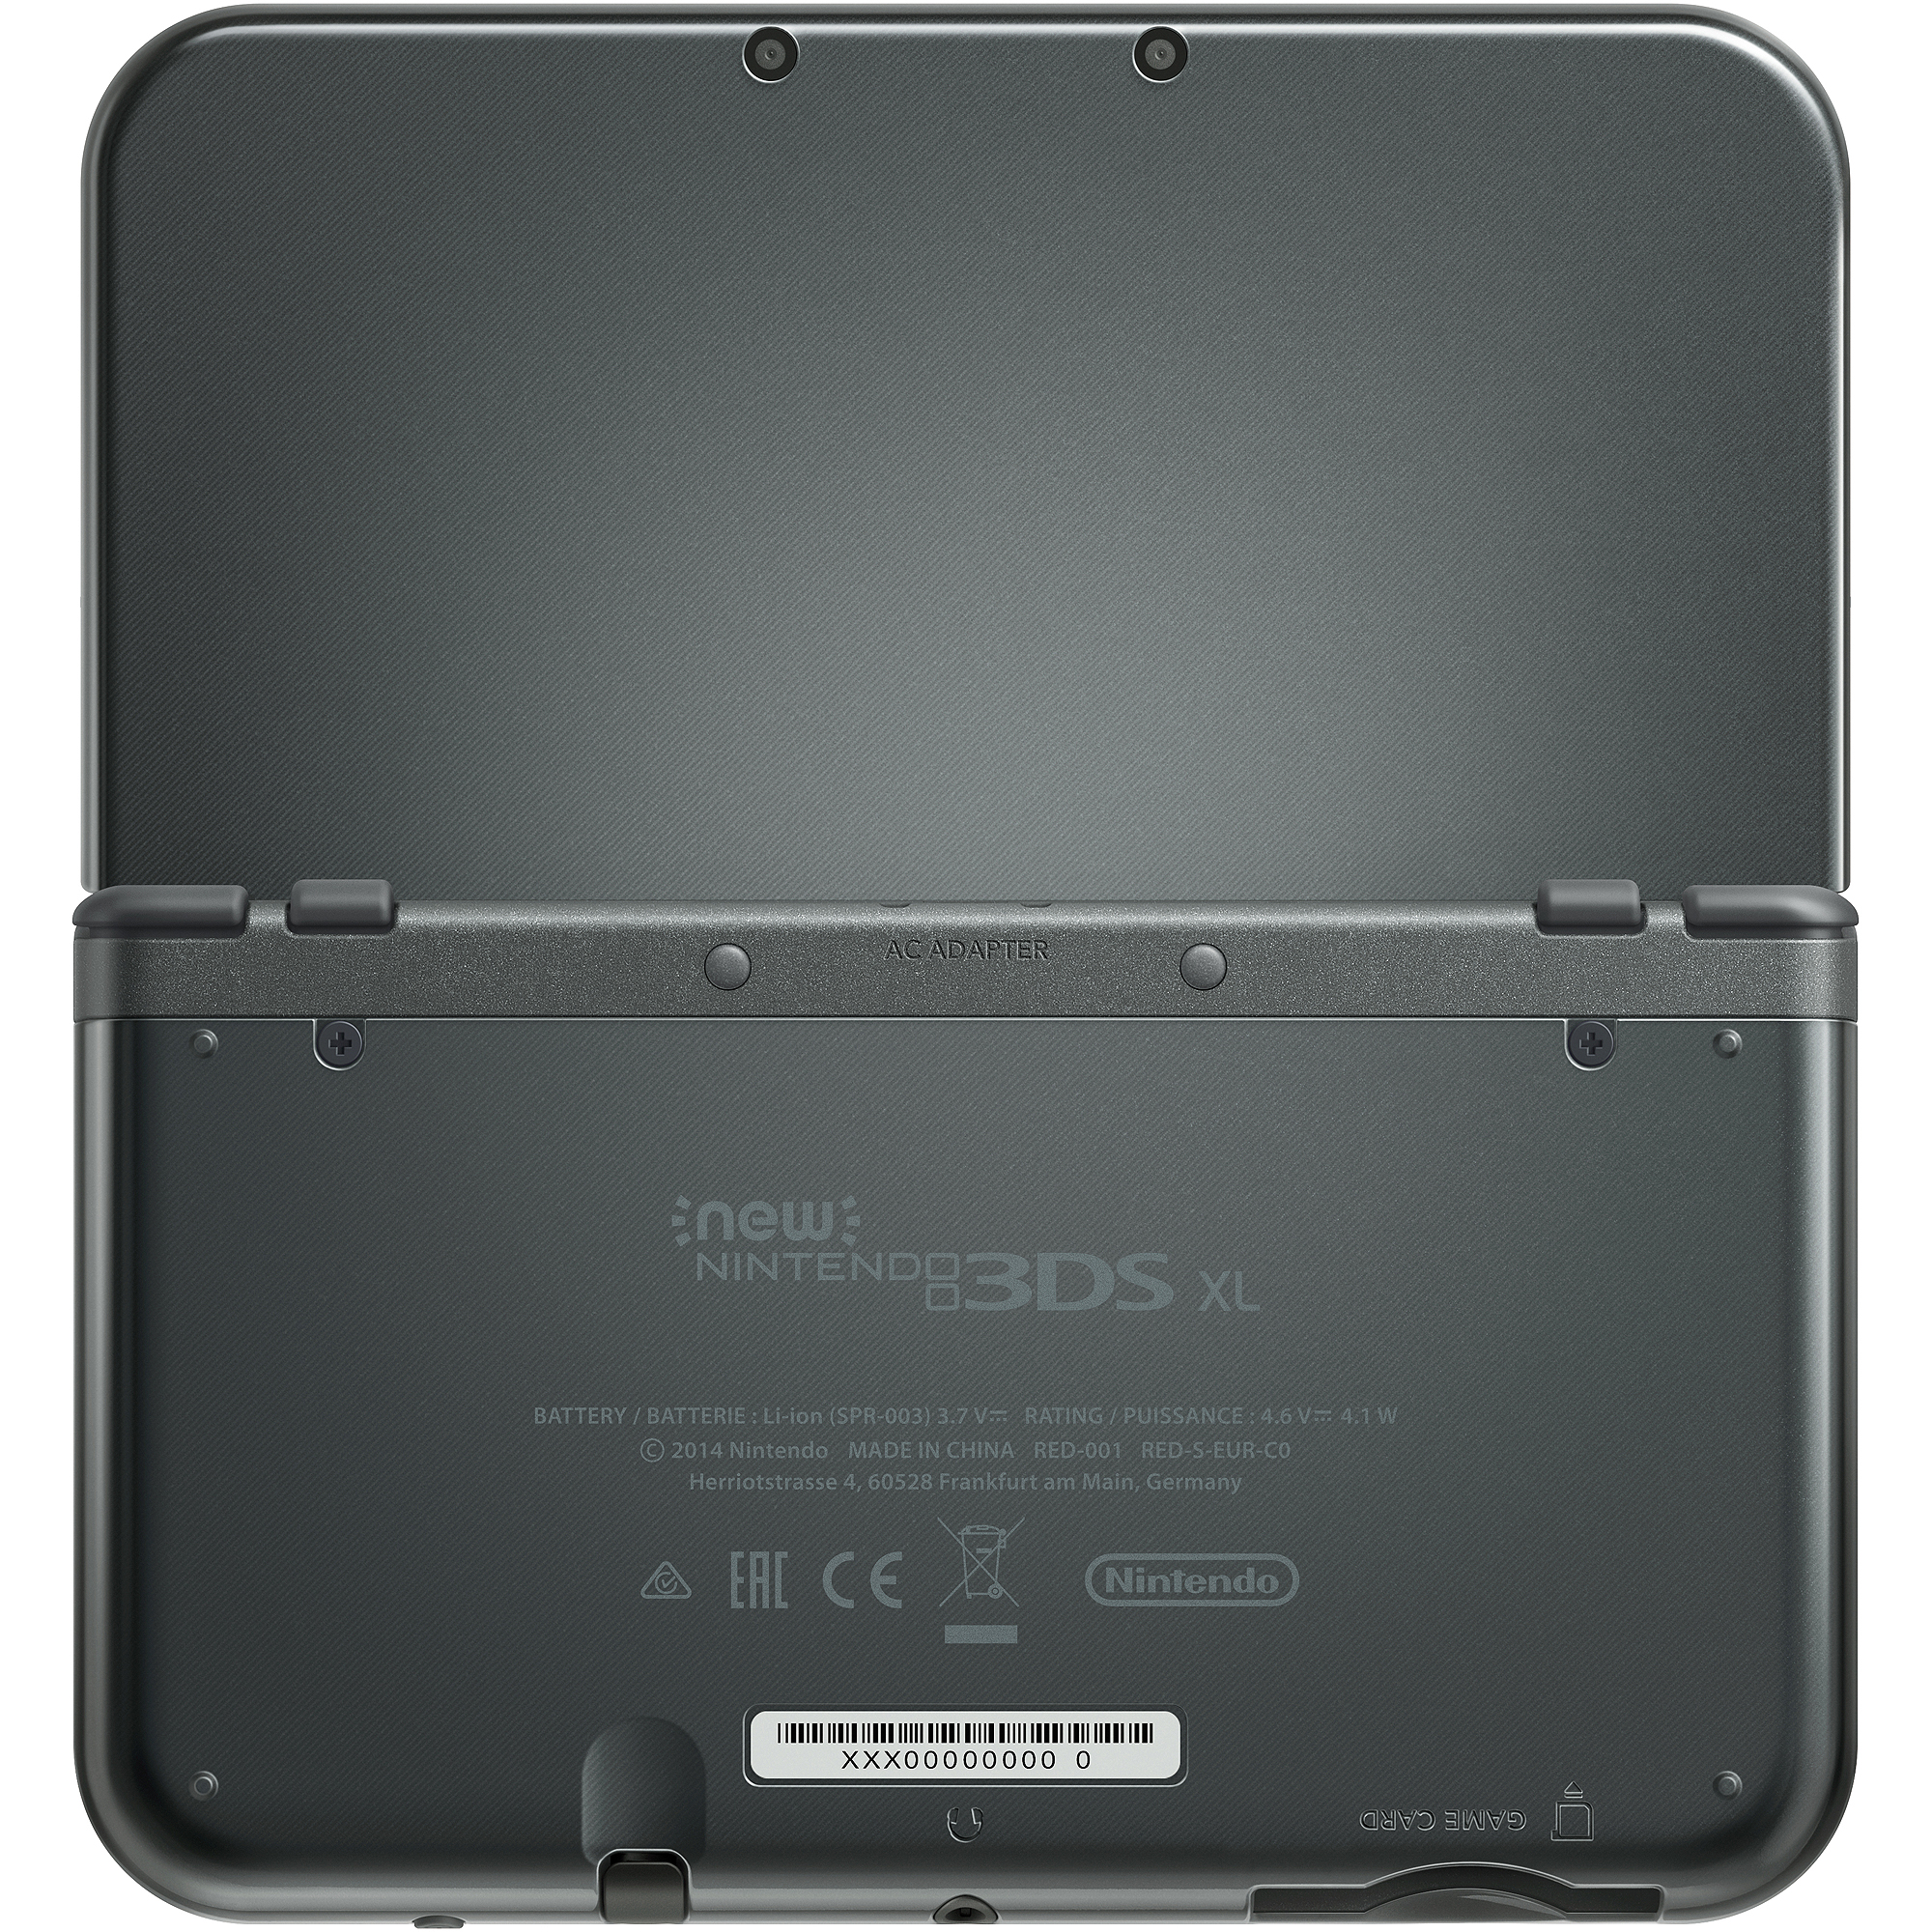 Nintendo New 3DS XL - Black - image 5 of 12